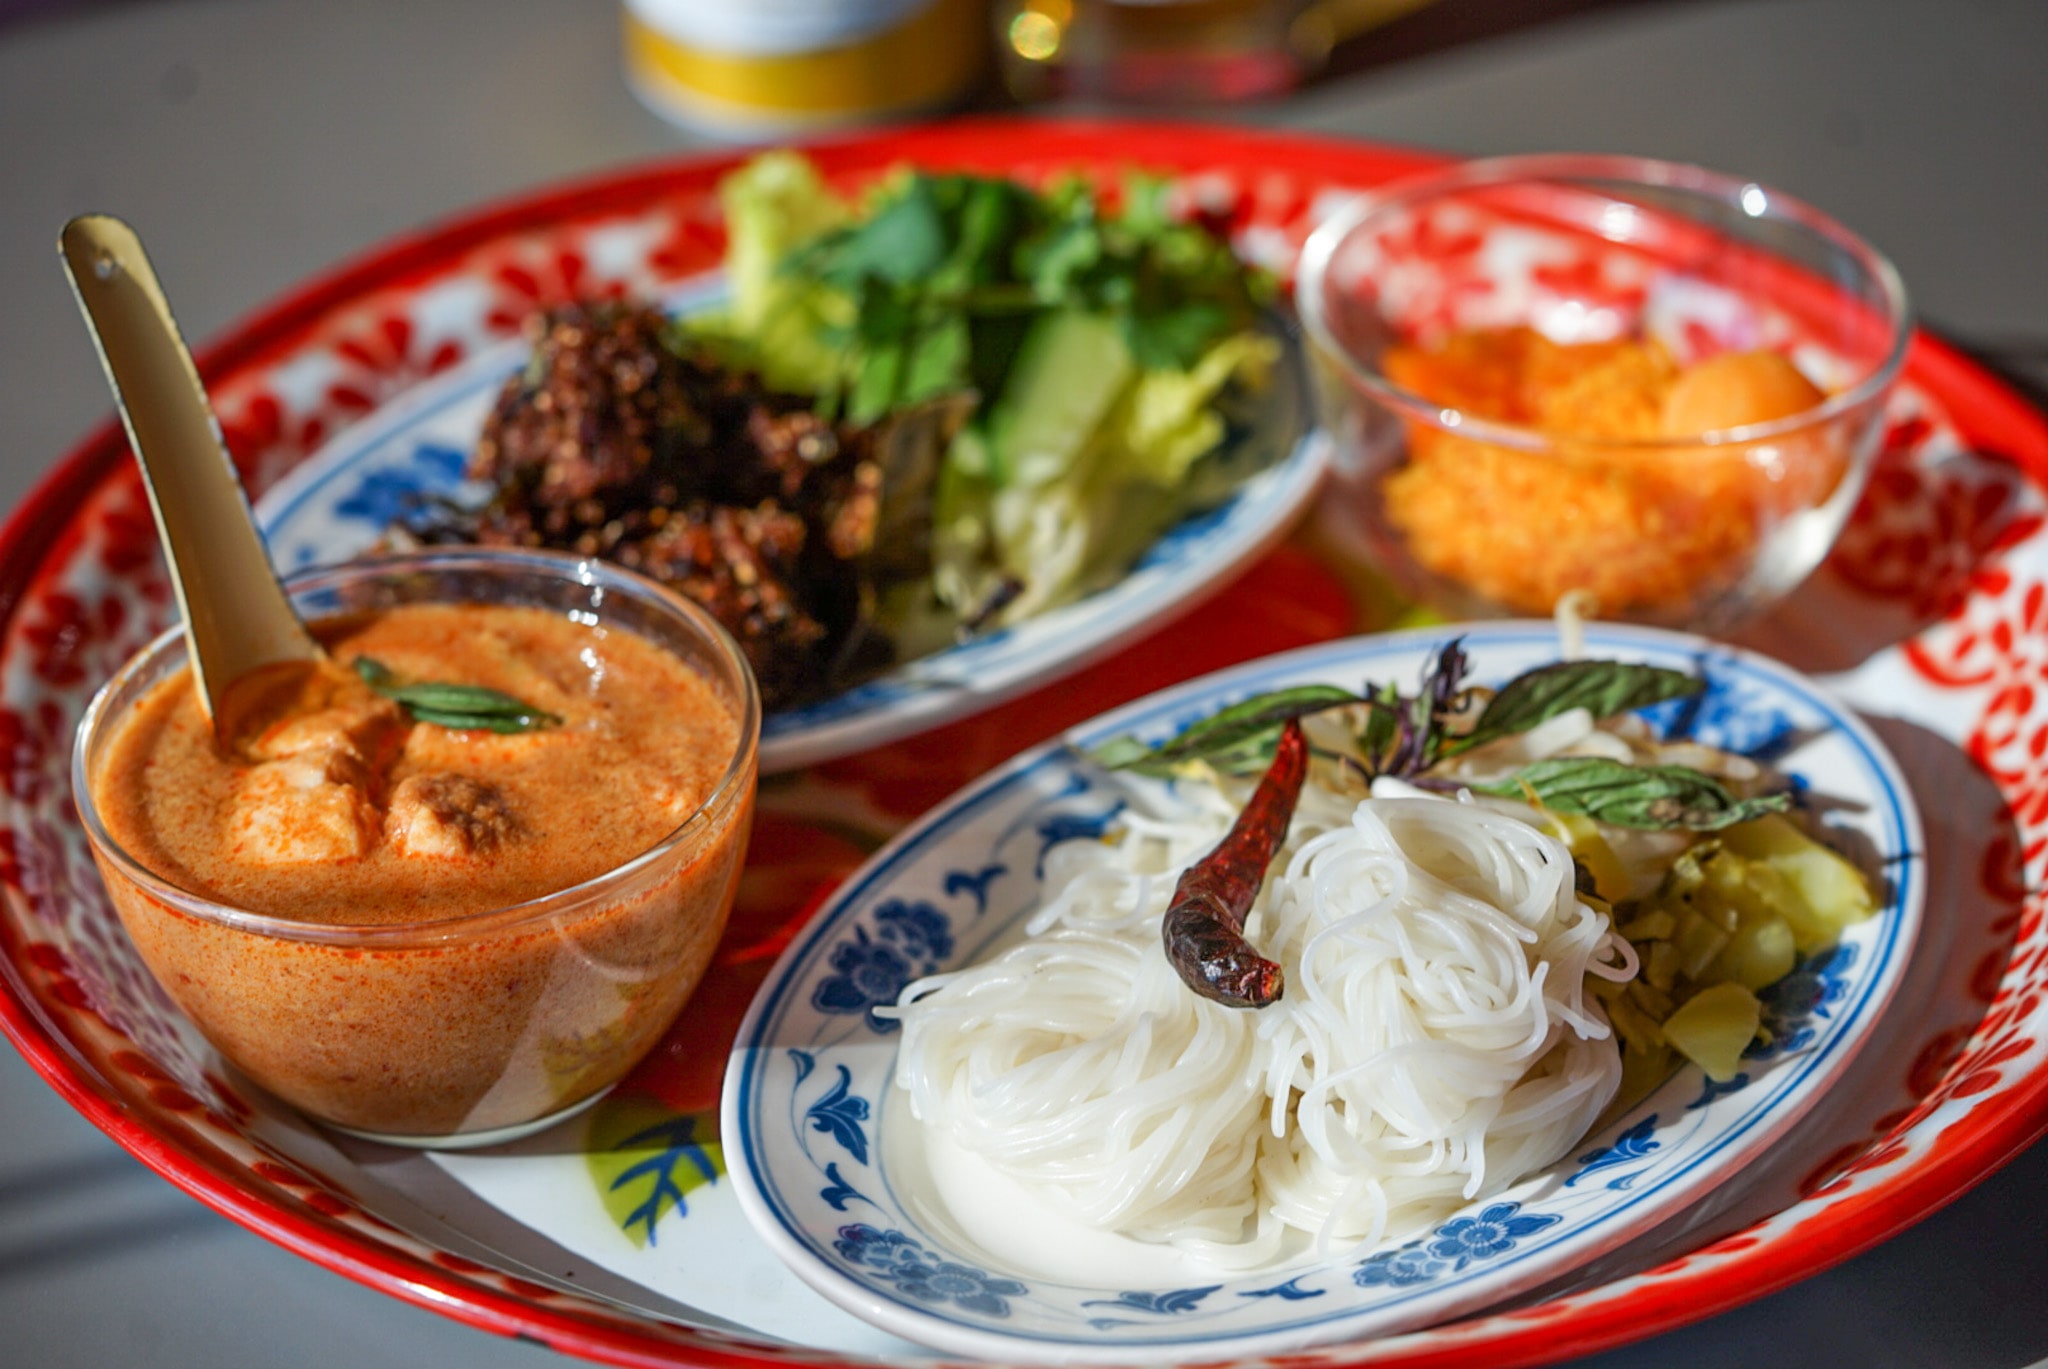 An image of a Thai dish celebrating Songkran, Thai new year.